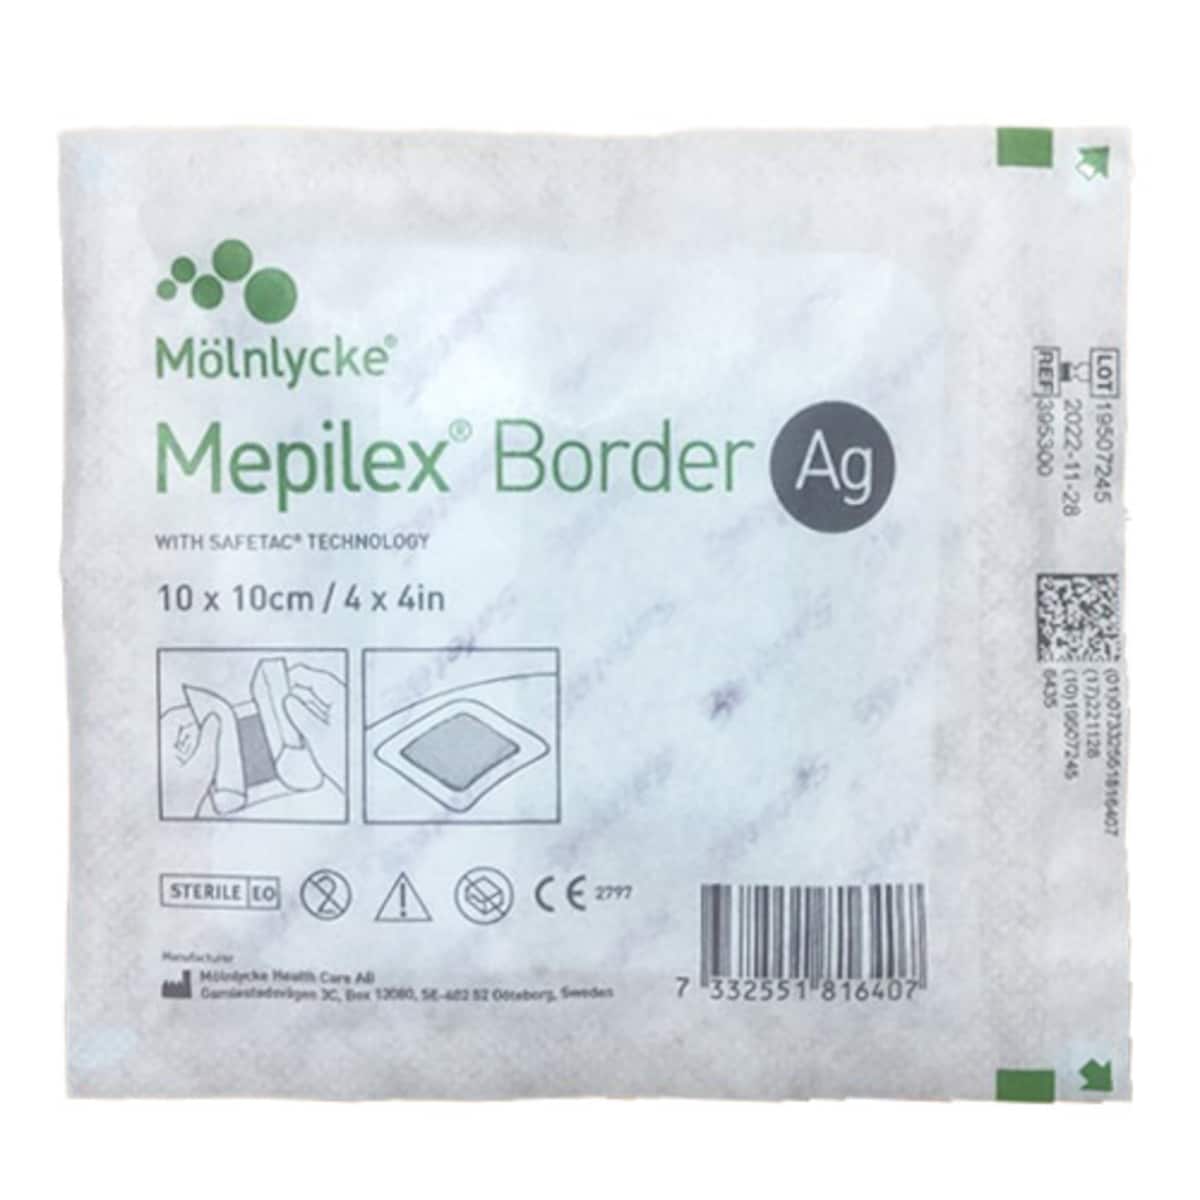 Mepilex Border AG Wound Dressing 395300 10cm x 10cm Single